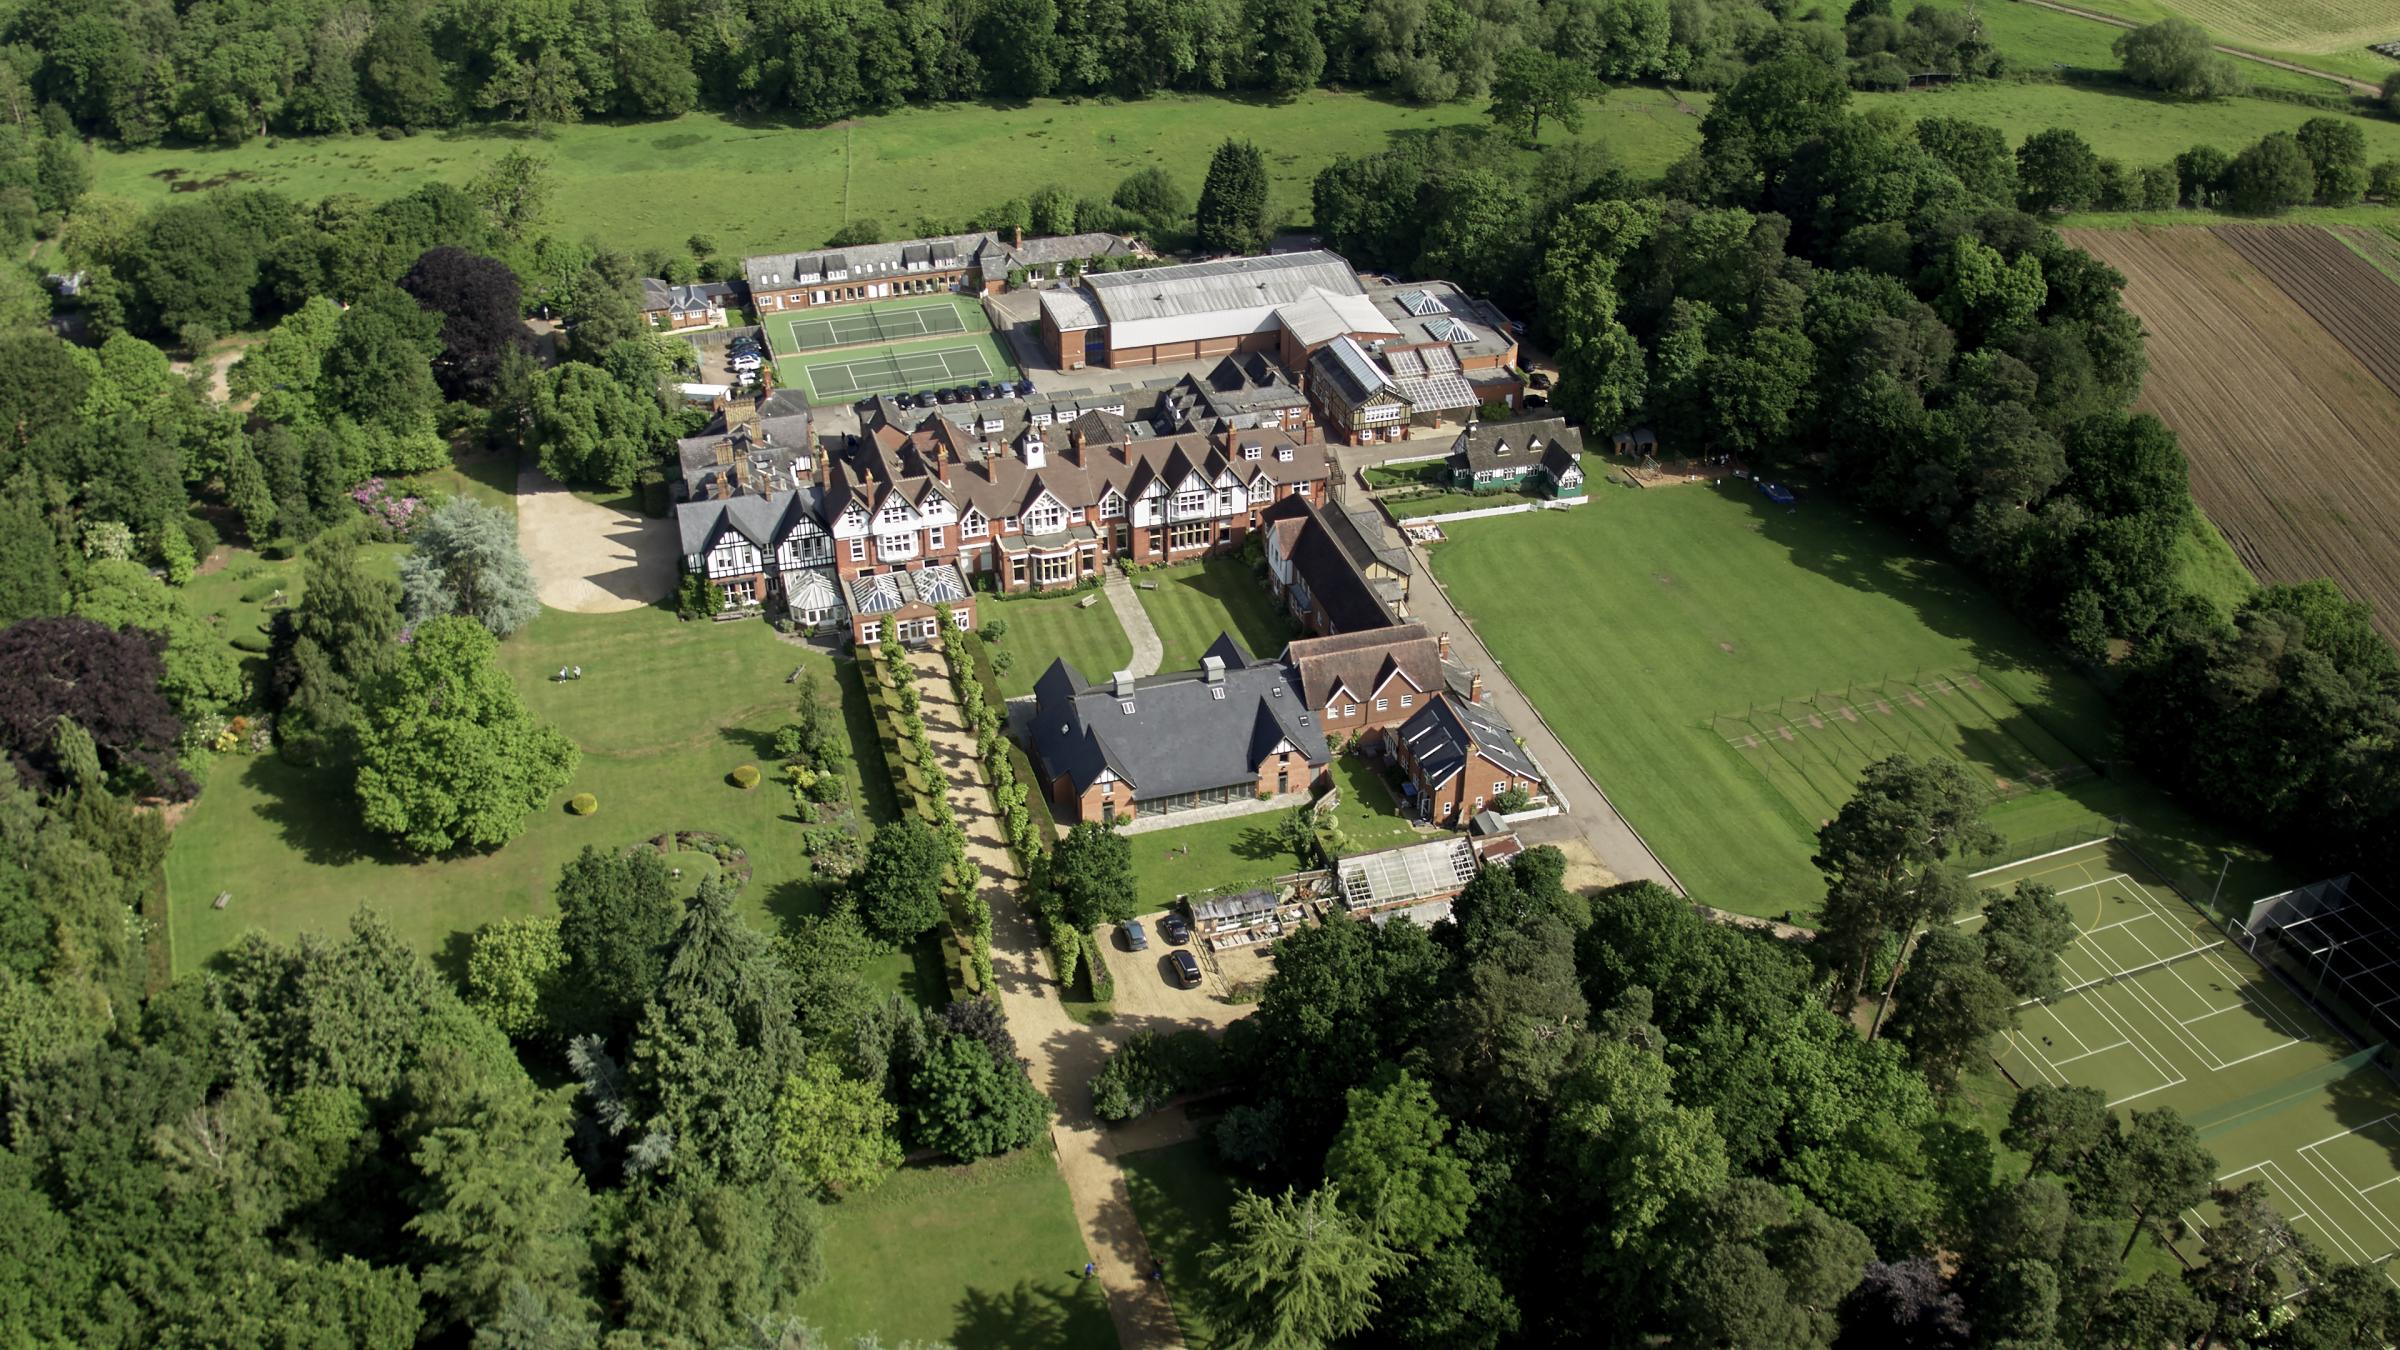 Ludgrove School grounds. Image via Wikimedia Commons